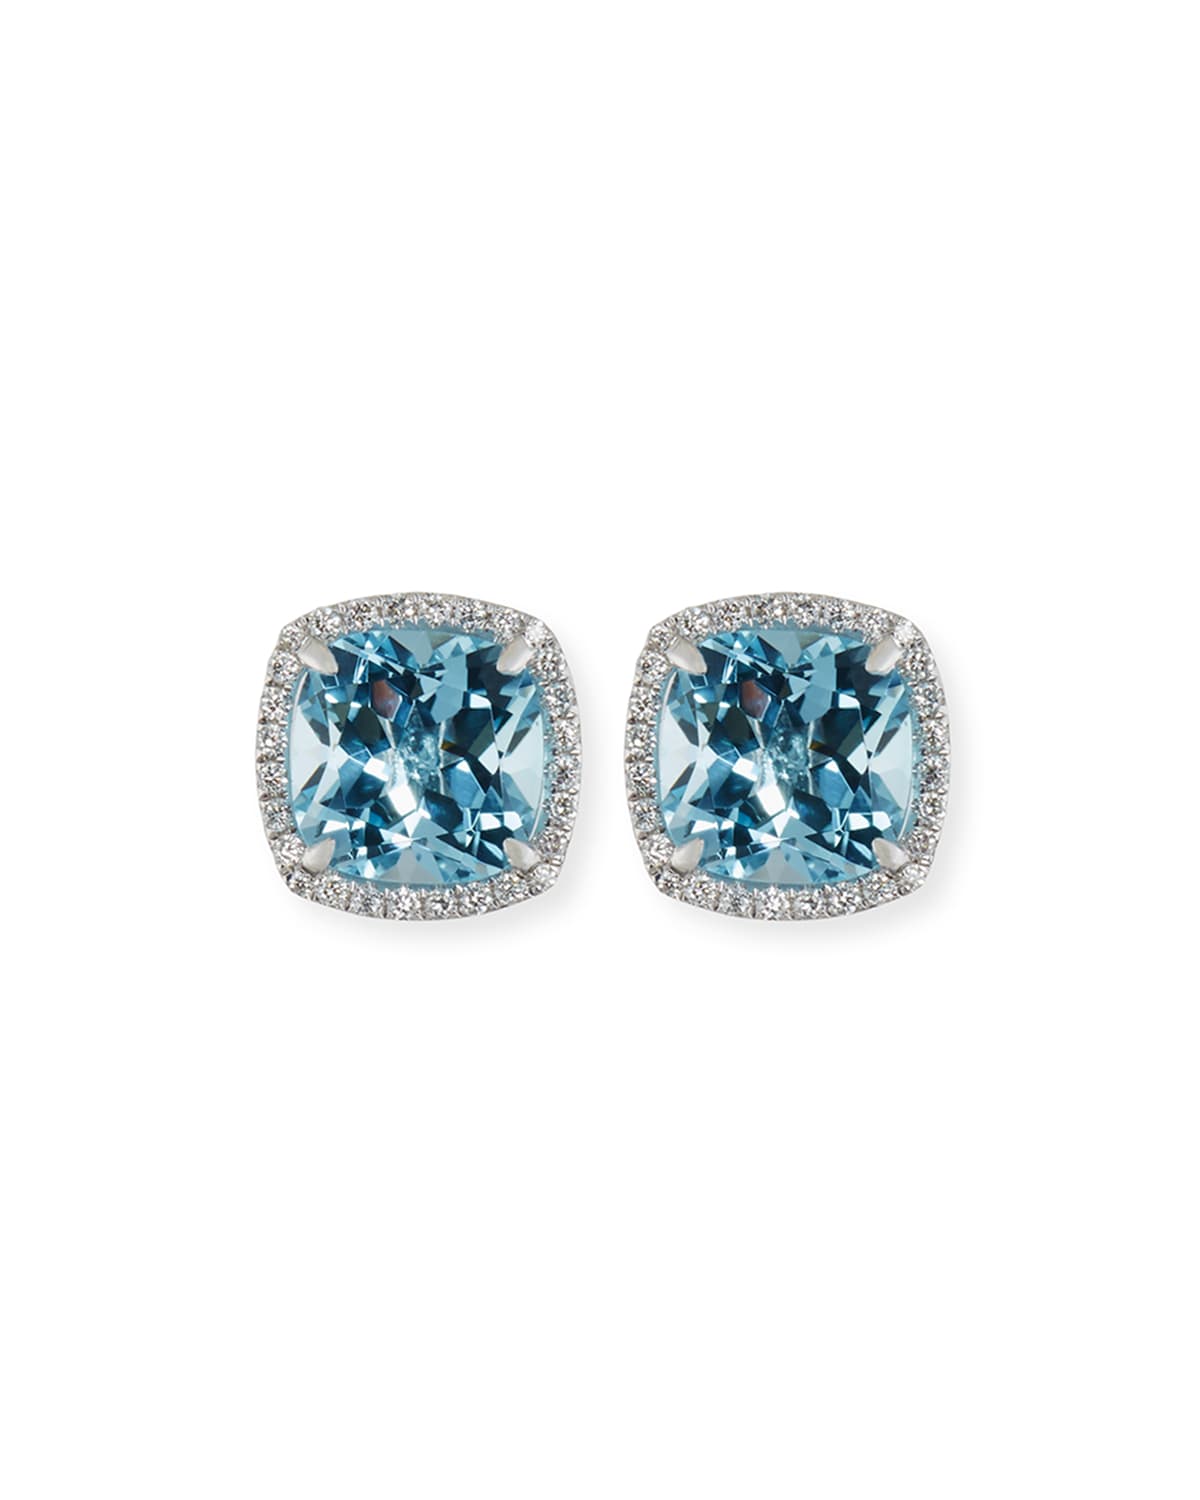 Frederic Sage 18K White Gold Blue Topaz Diamond Halo Stud Earrings